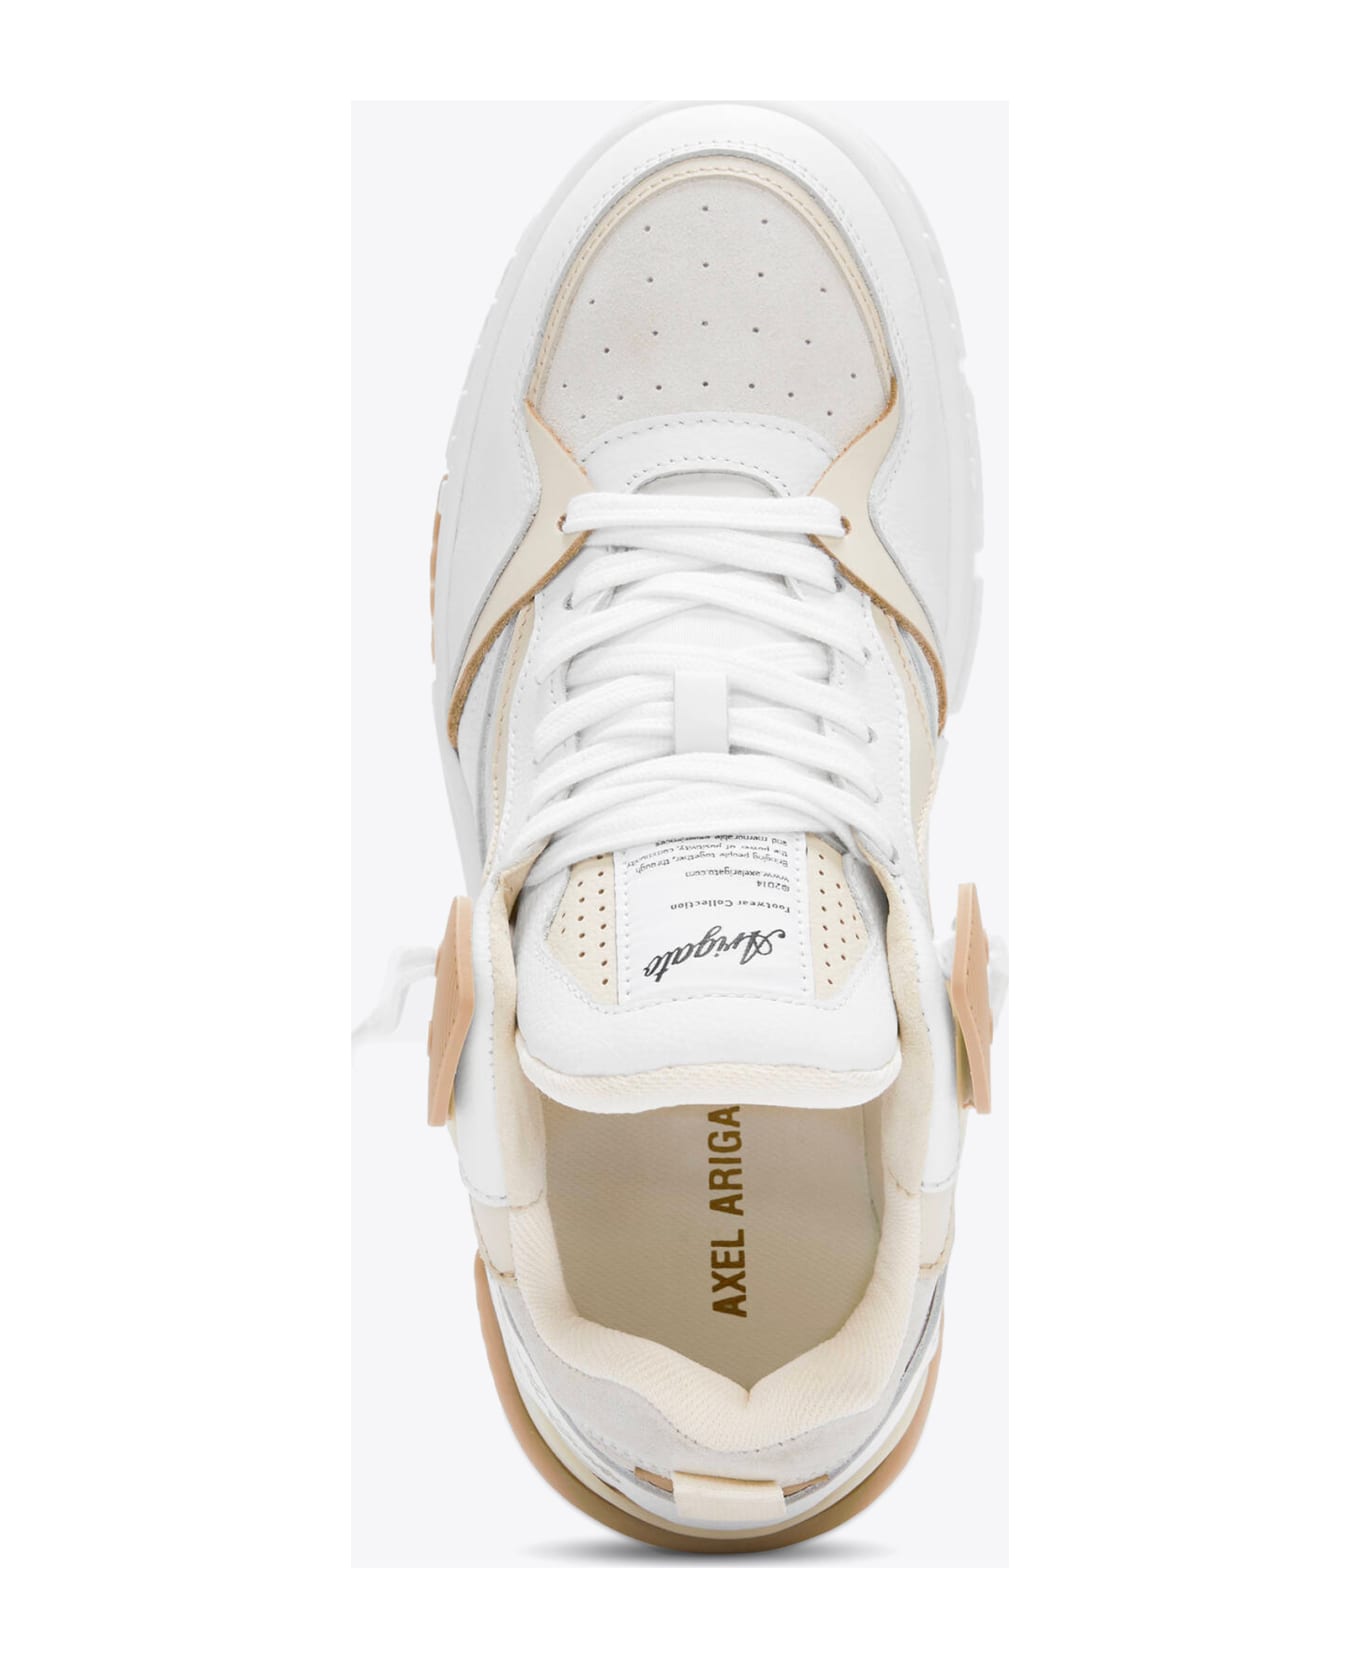 Axel Arigato Astro Sneaker White and beige leather 90s style low sneaker - Astro Sneaker - Bianco/beige